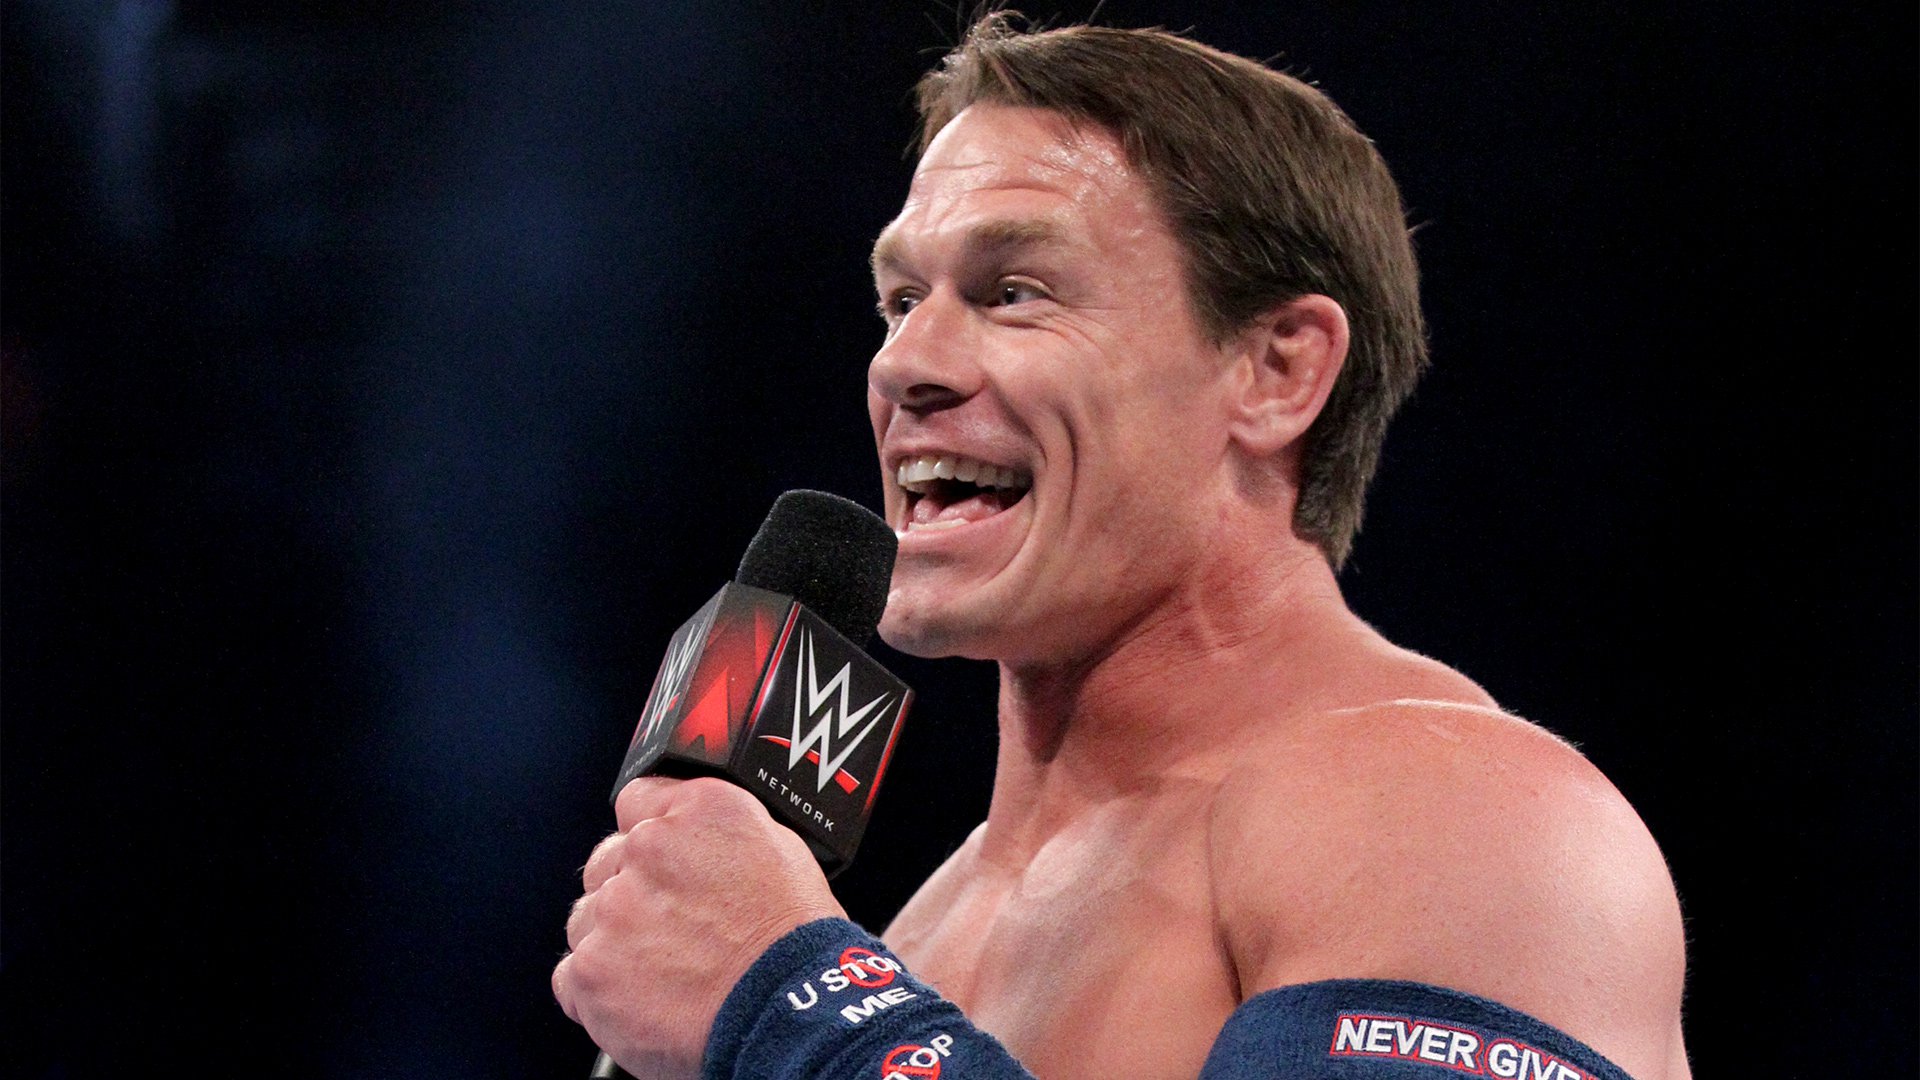 John Cena’s new haircut causes a social media stir during WWE Super